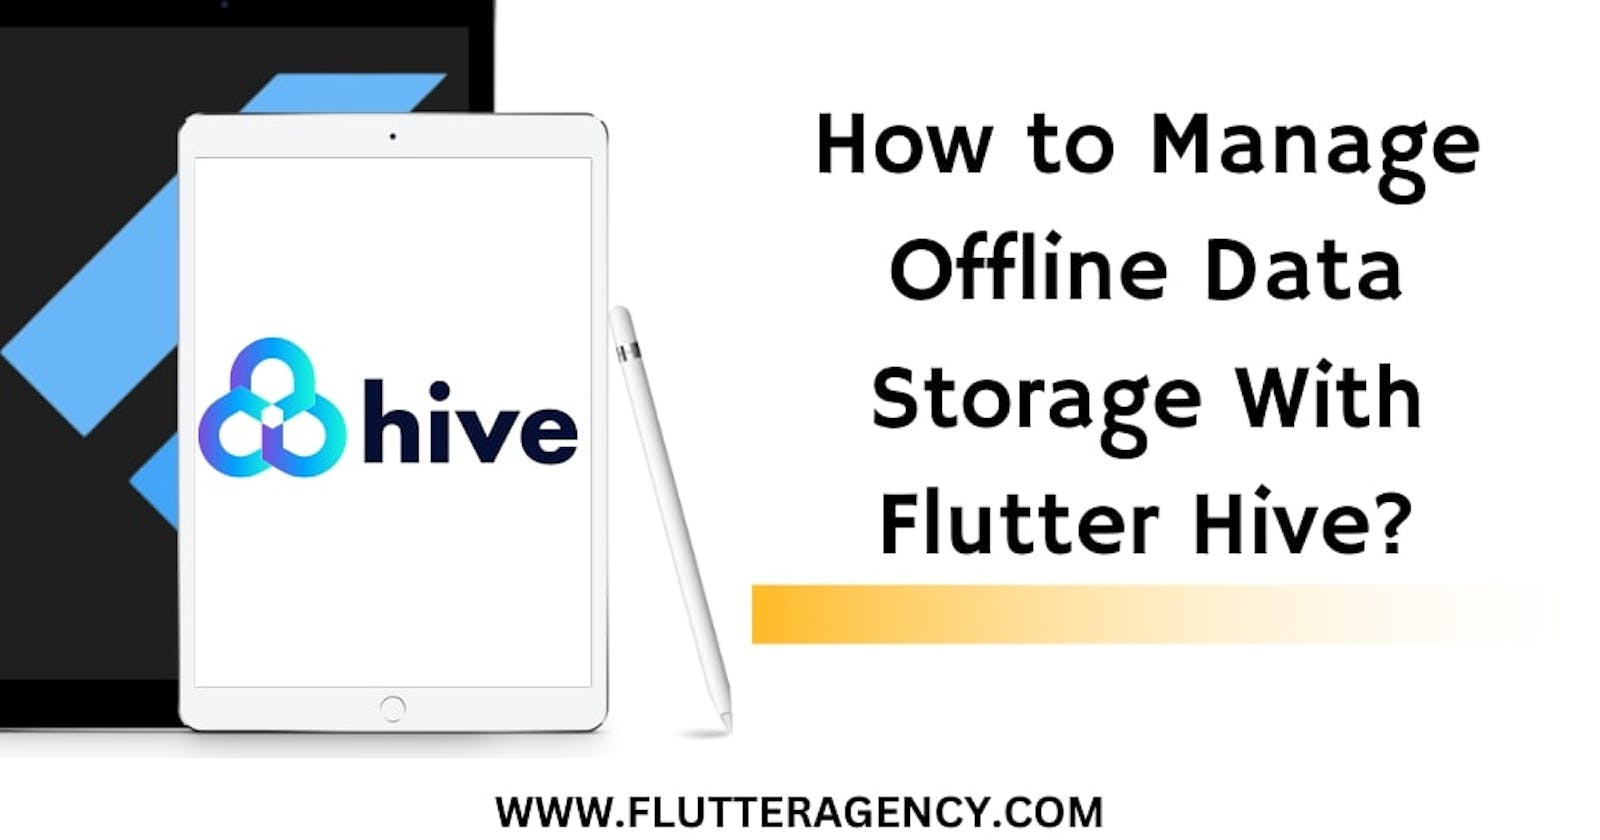 Managing Offline Data Storage With Flutter Hive